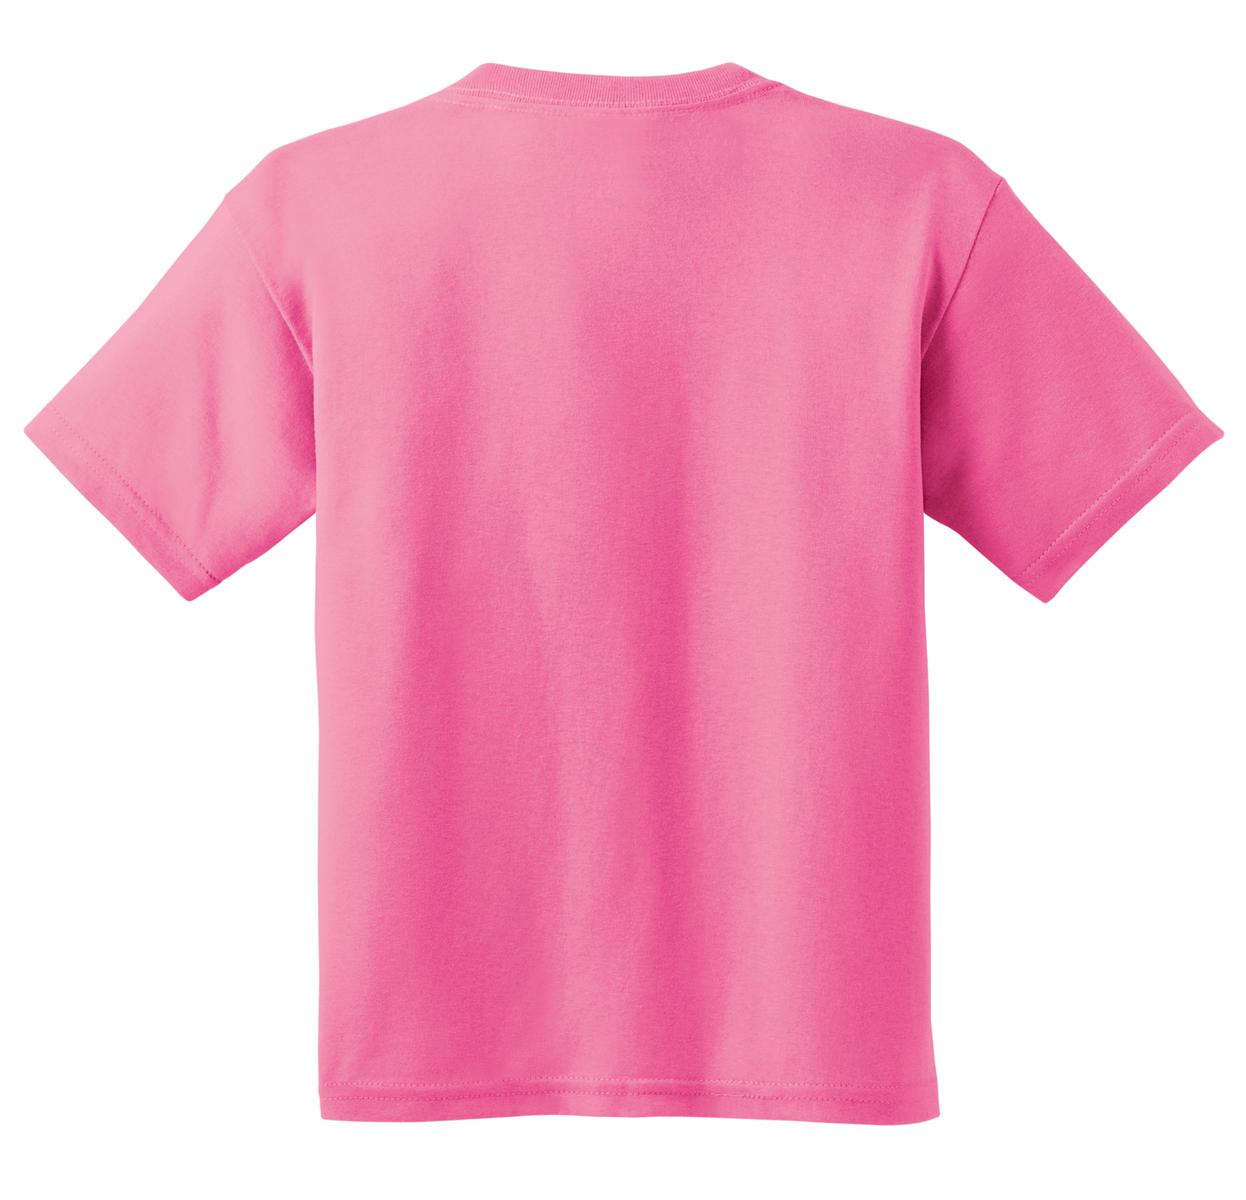 Artix - Big Girls T-Shirts and Tank Tops, up to Big Girls Size 24 - San Francisco - image 5 of 5